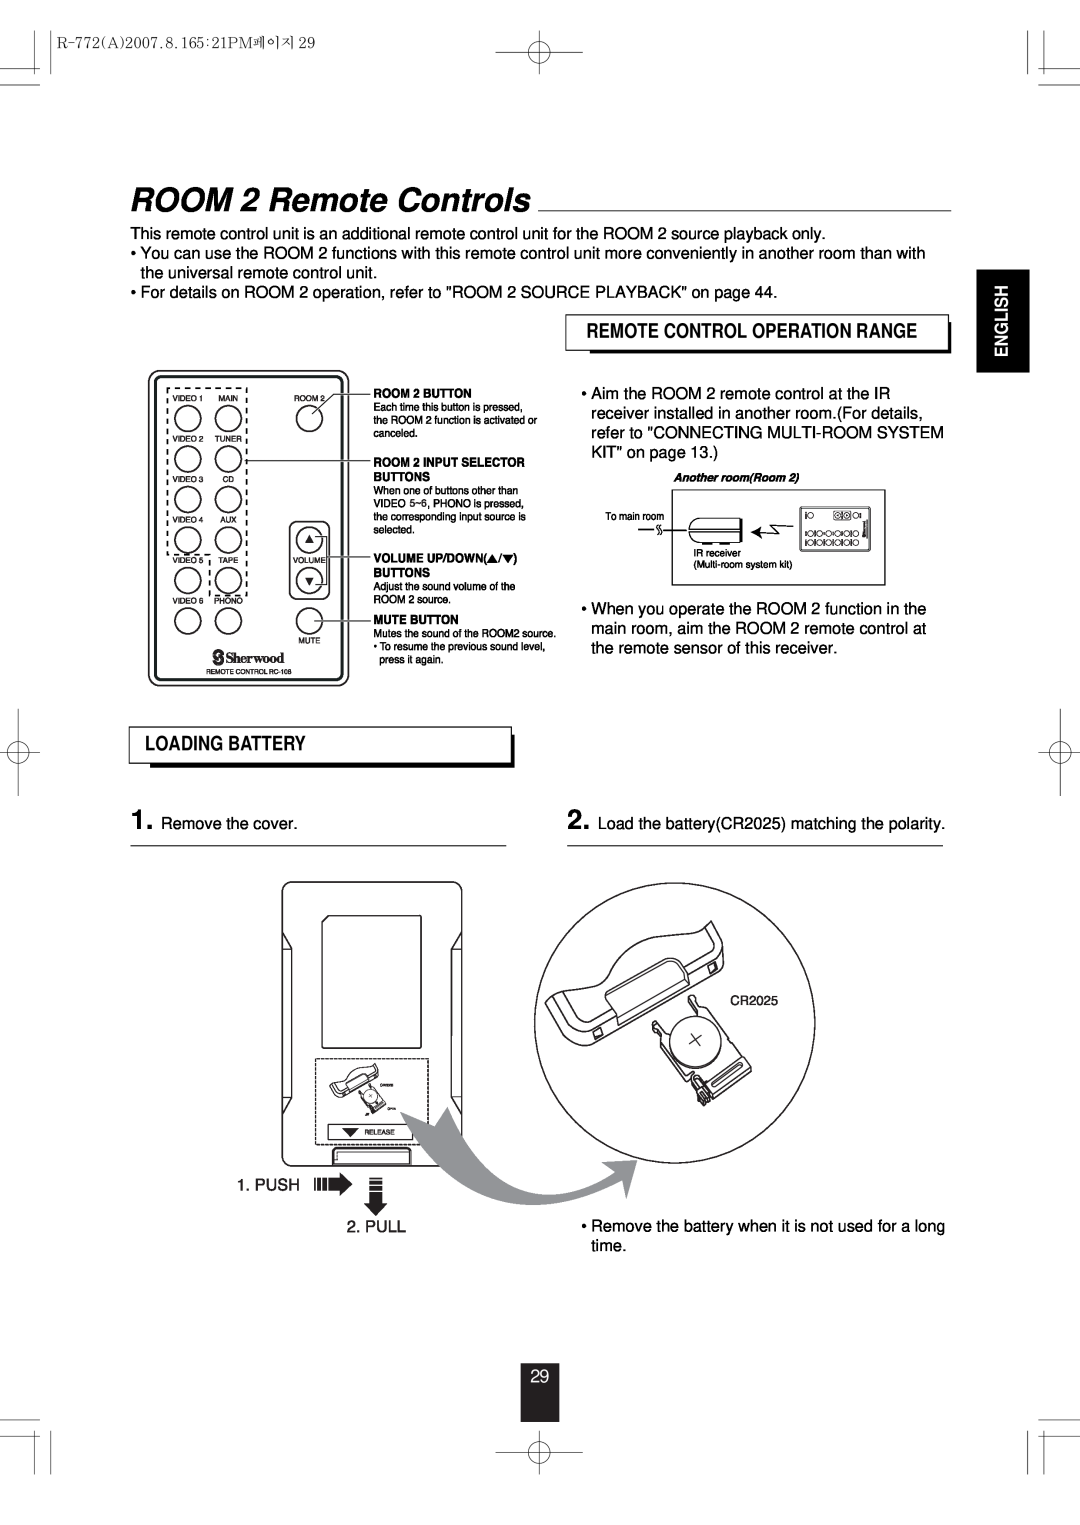 Sherwood R-772 manual ROOM 2 Remote Controls, Remote Control Operation Range, Loading Battery, English 